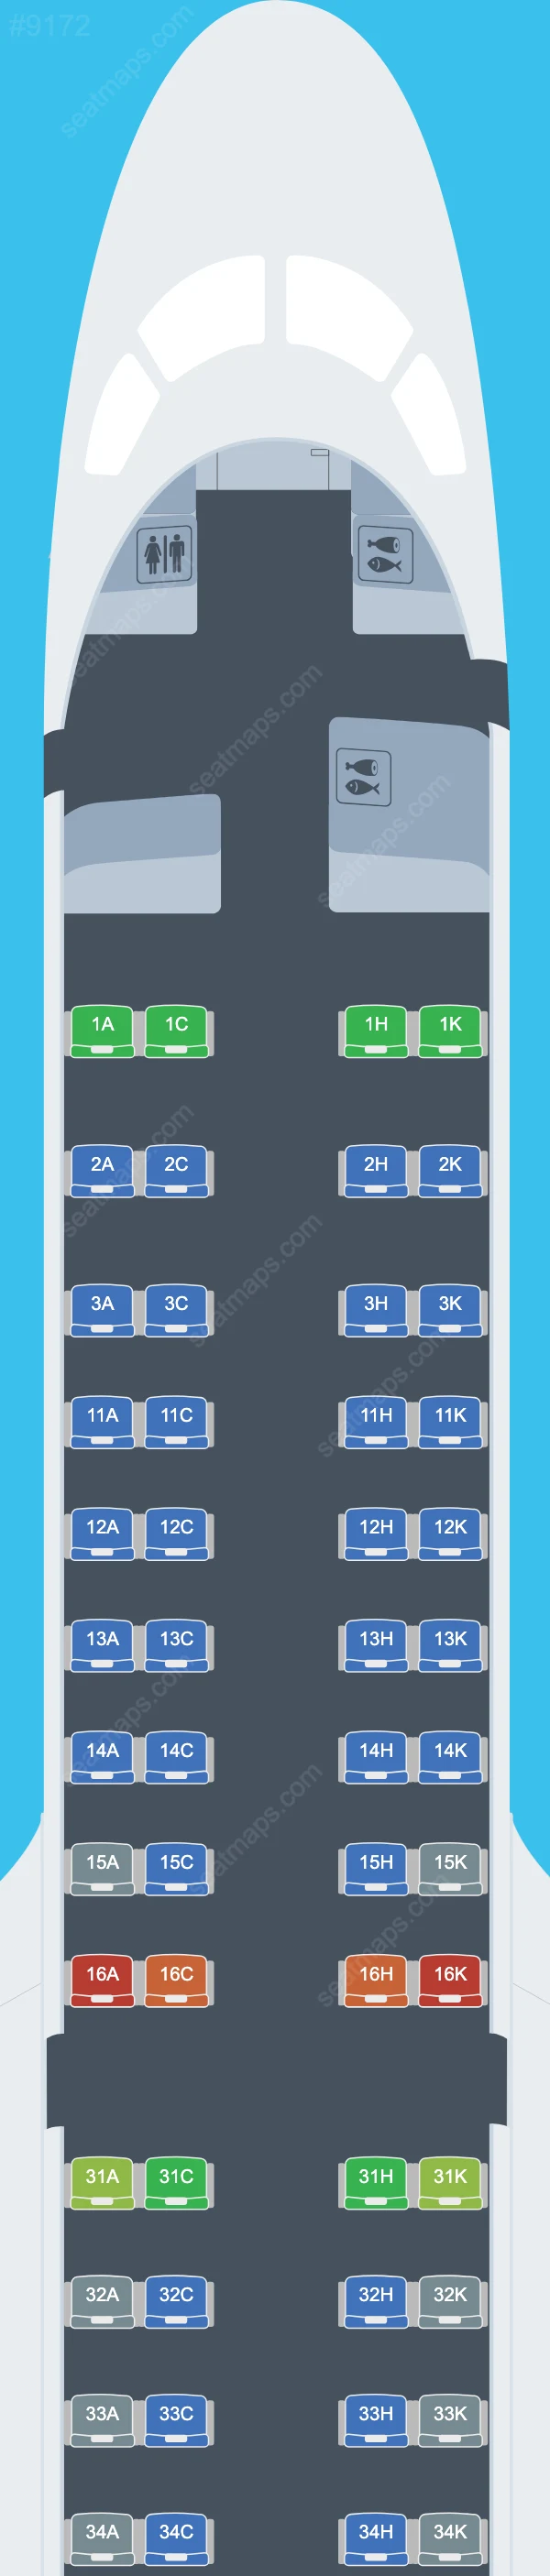 Air Astana Embraer E190-E2 Plan de Salle E190 E2 V.1